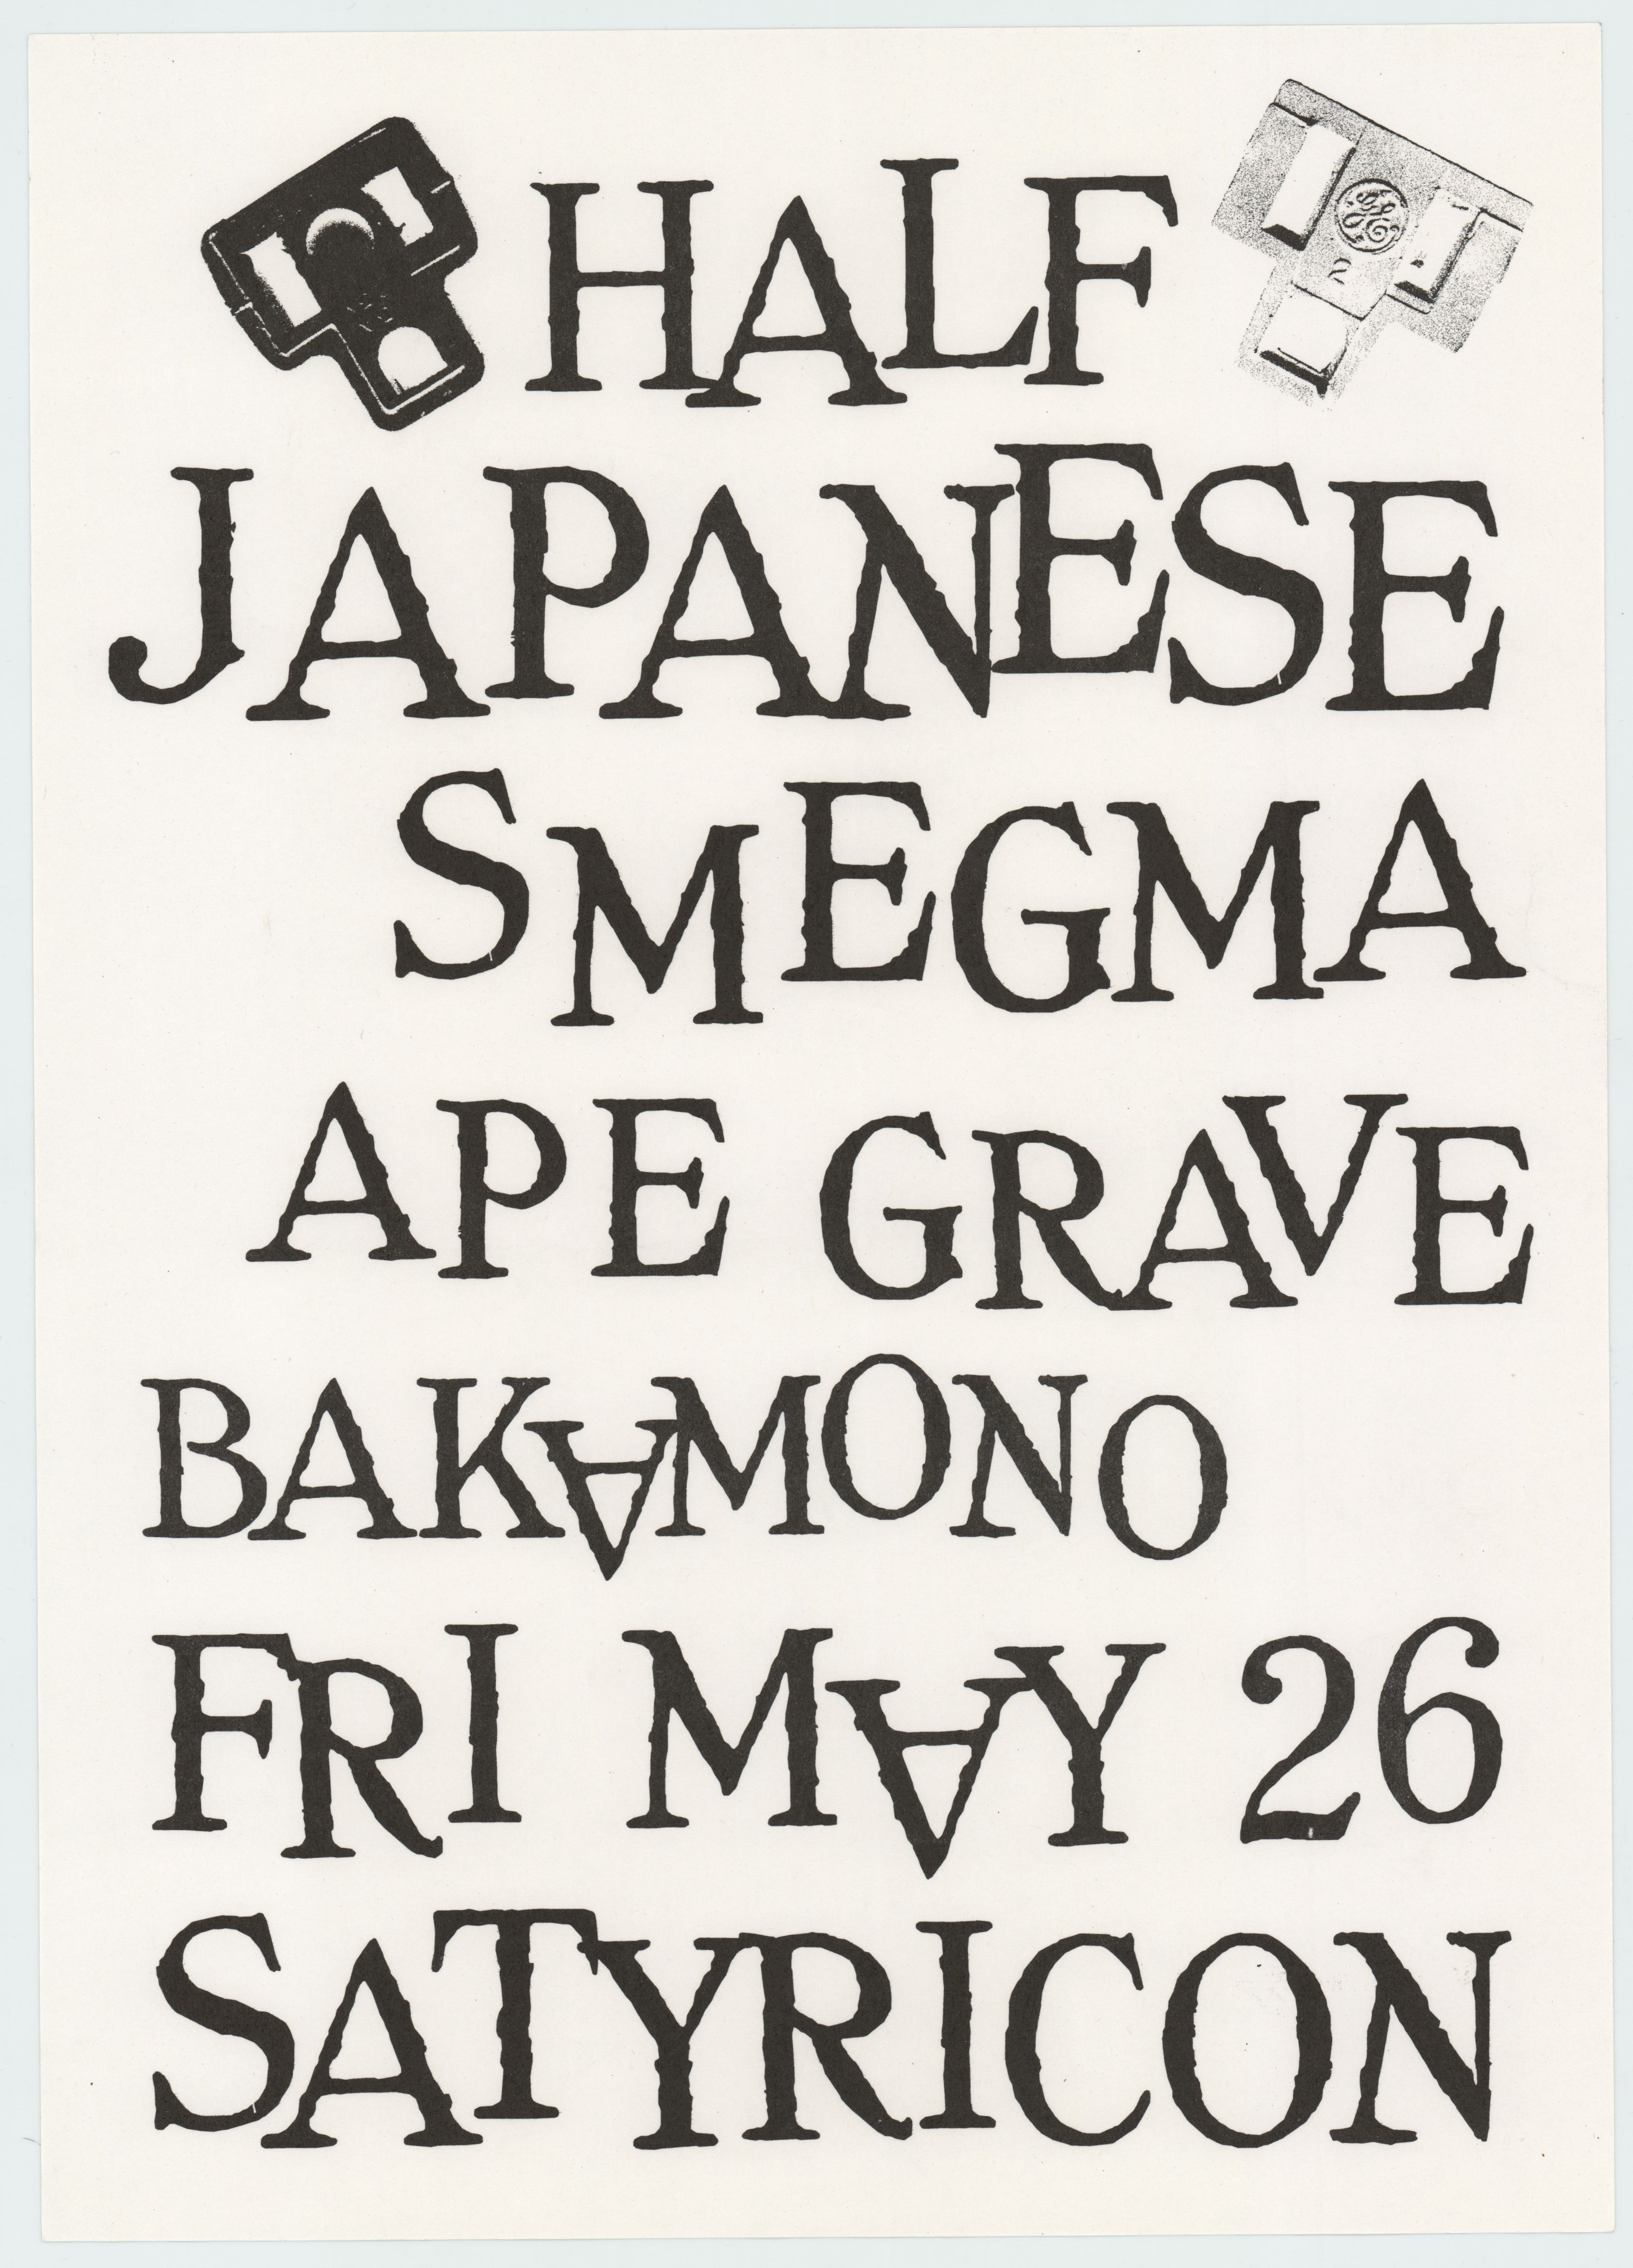 Half Japanese Satyricon 1000-05-26 1000 Satyricon May 26 Concert Poster